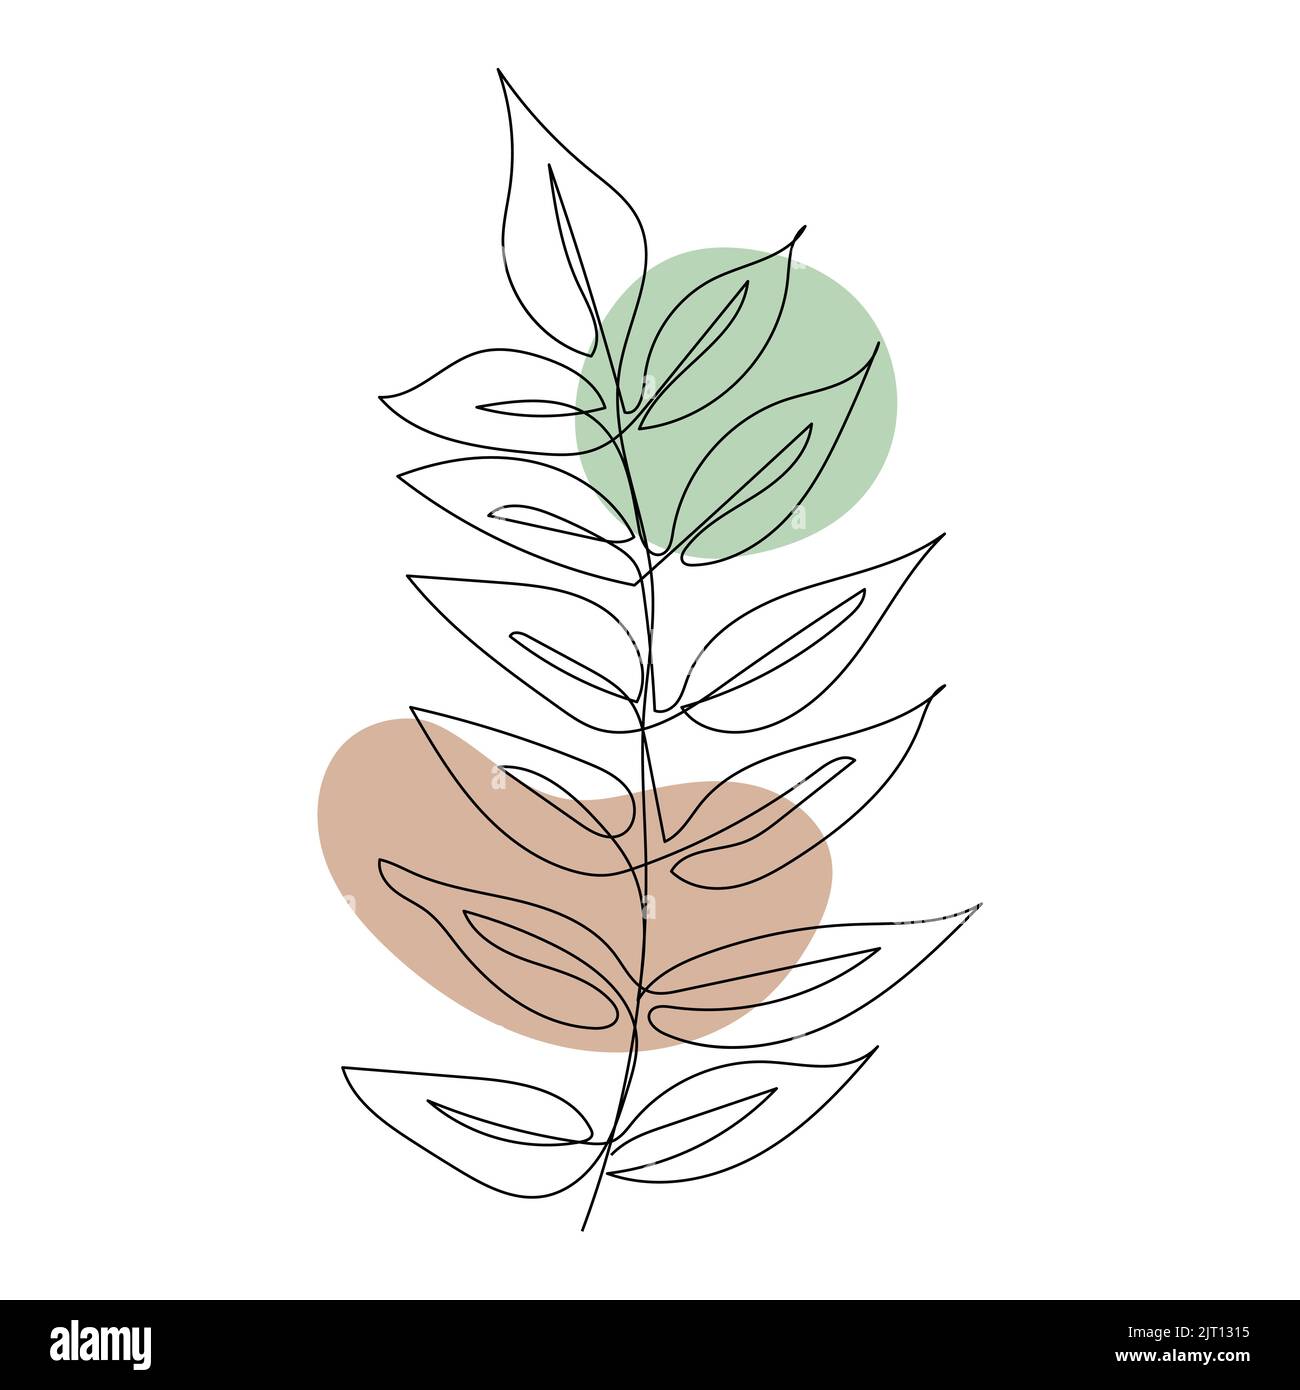 Plant leaves line art. Contour drawing. Minimalism art. Stock Vector